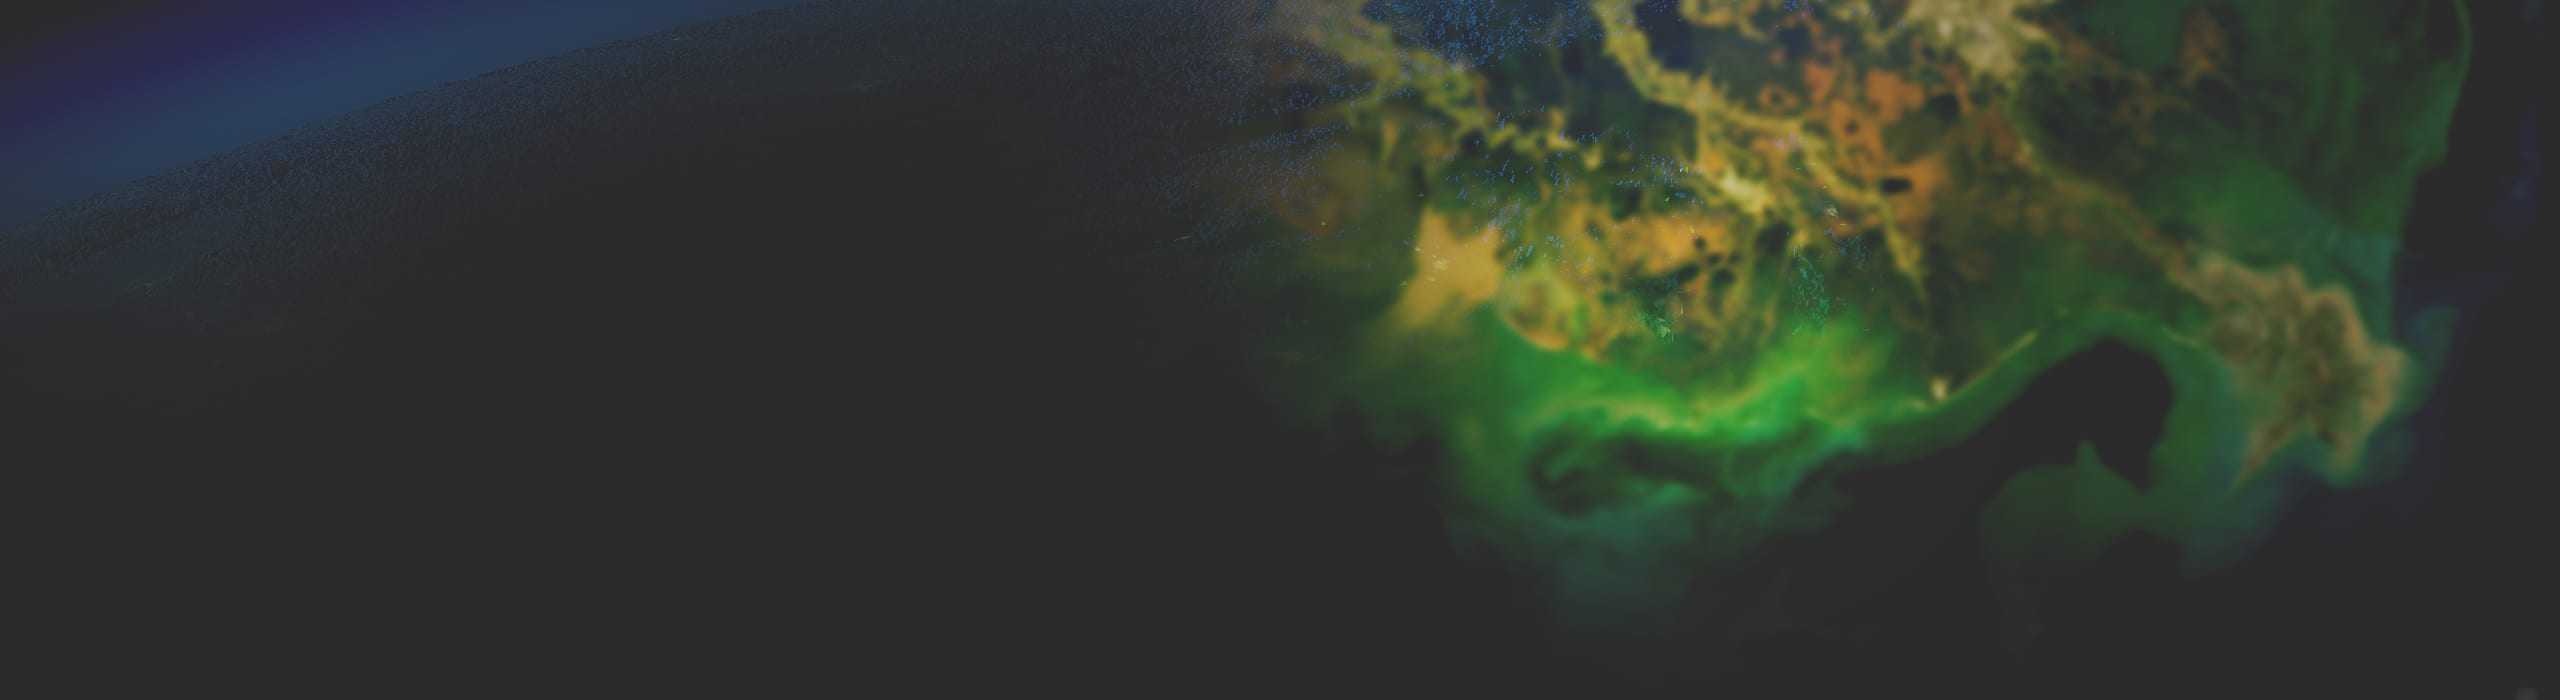 A black background fades into a satellite image of a green coastal landscape